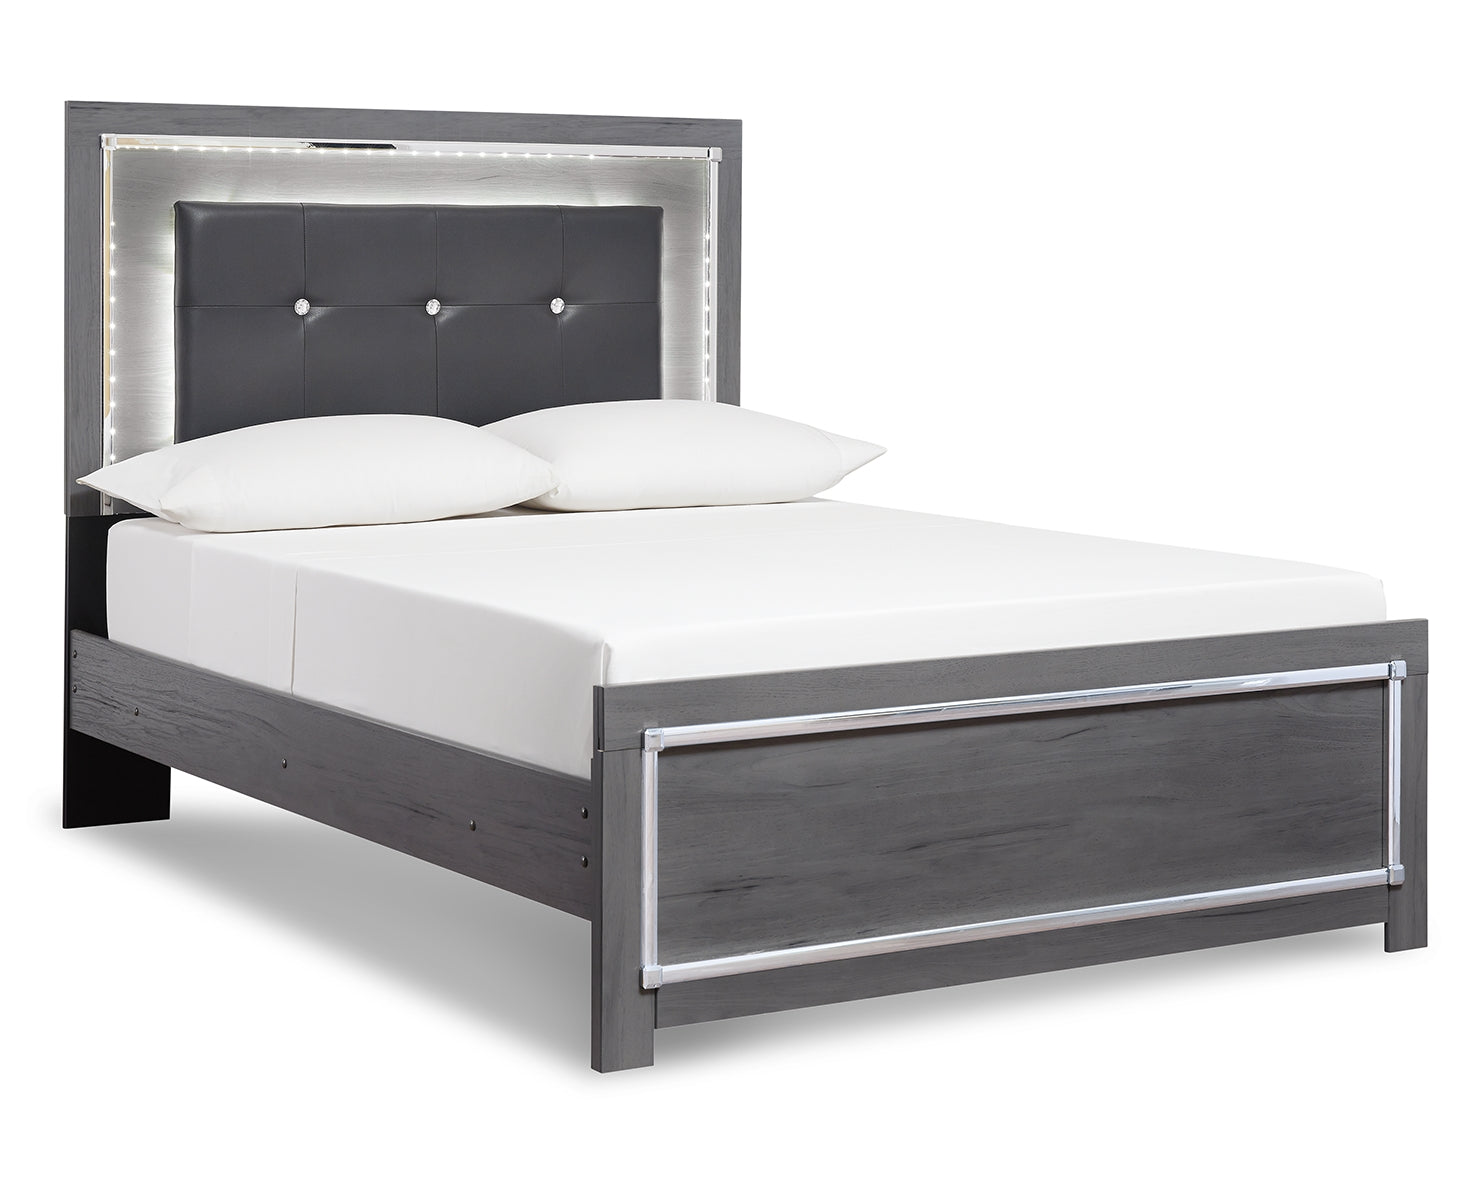 Lodanna Full Panel Bed with Dresser